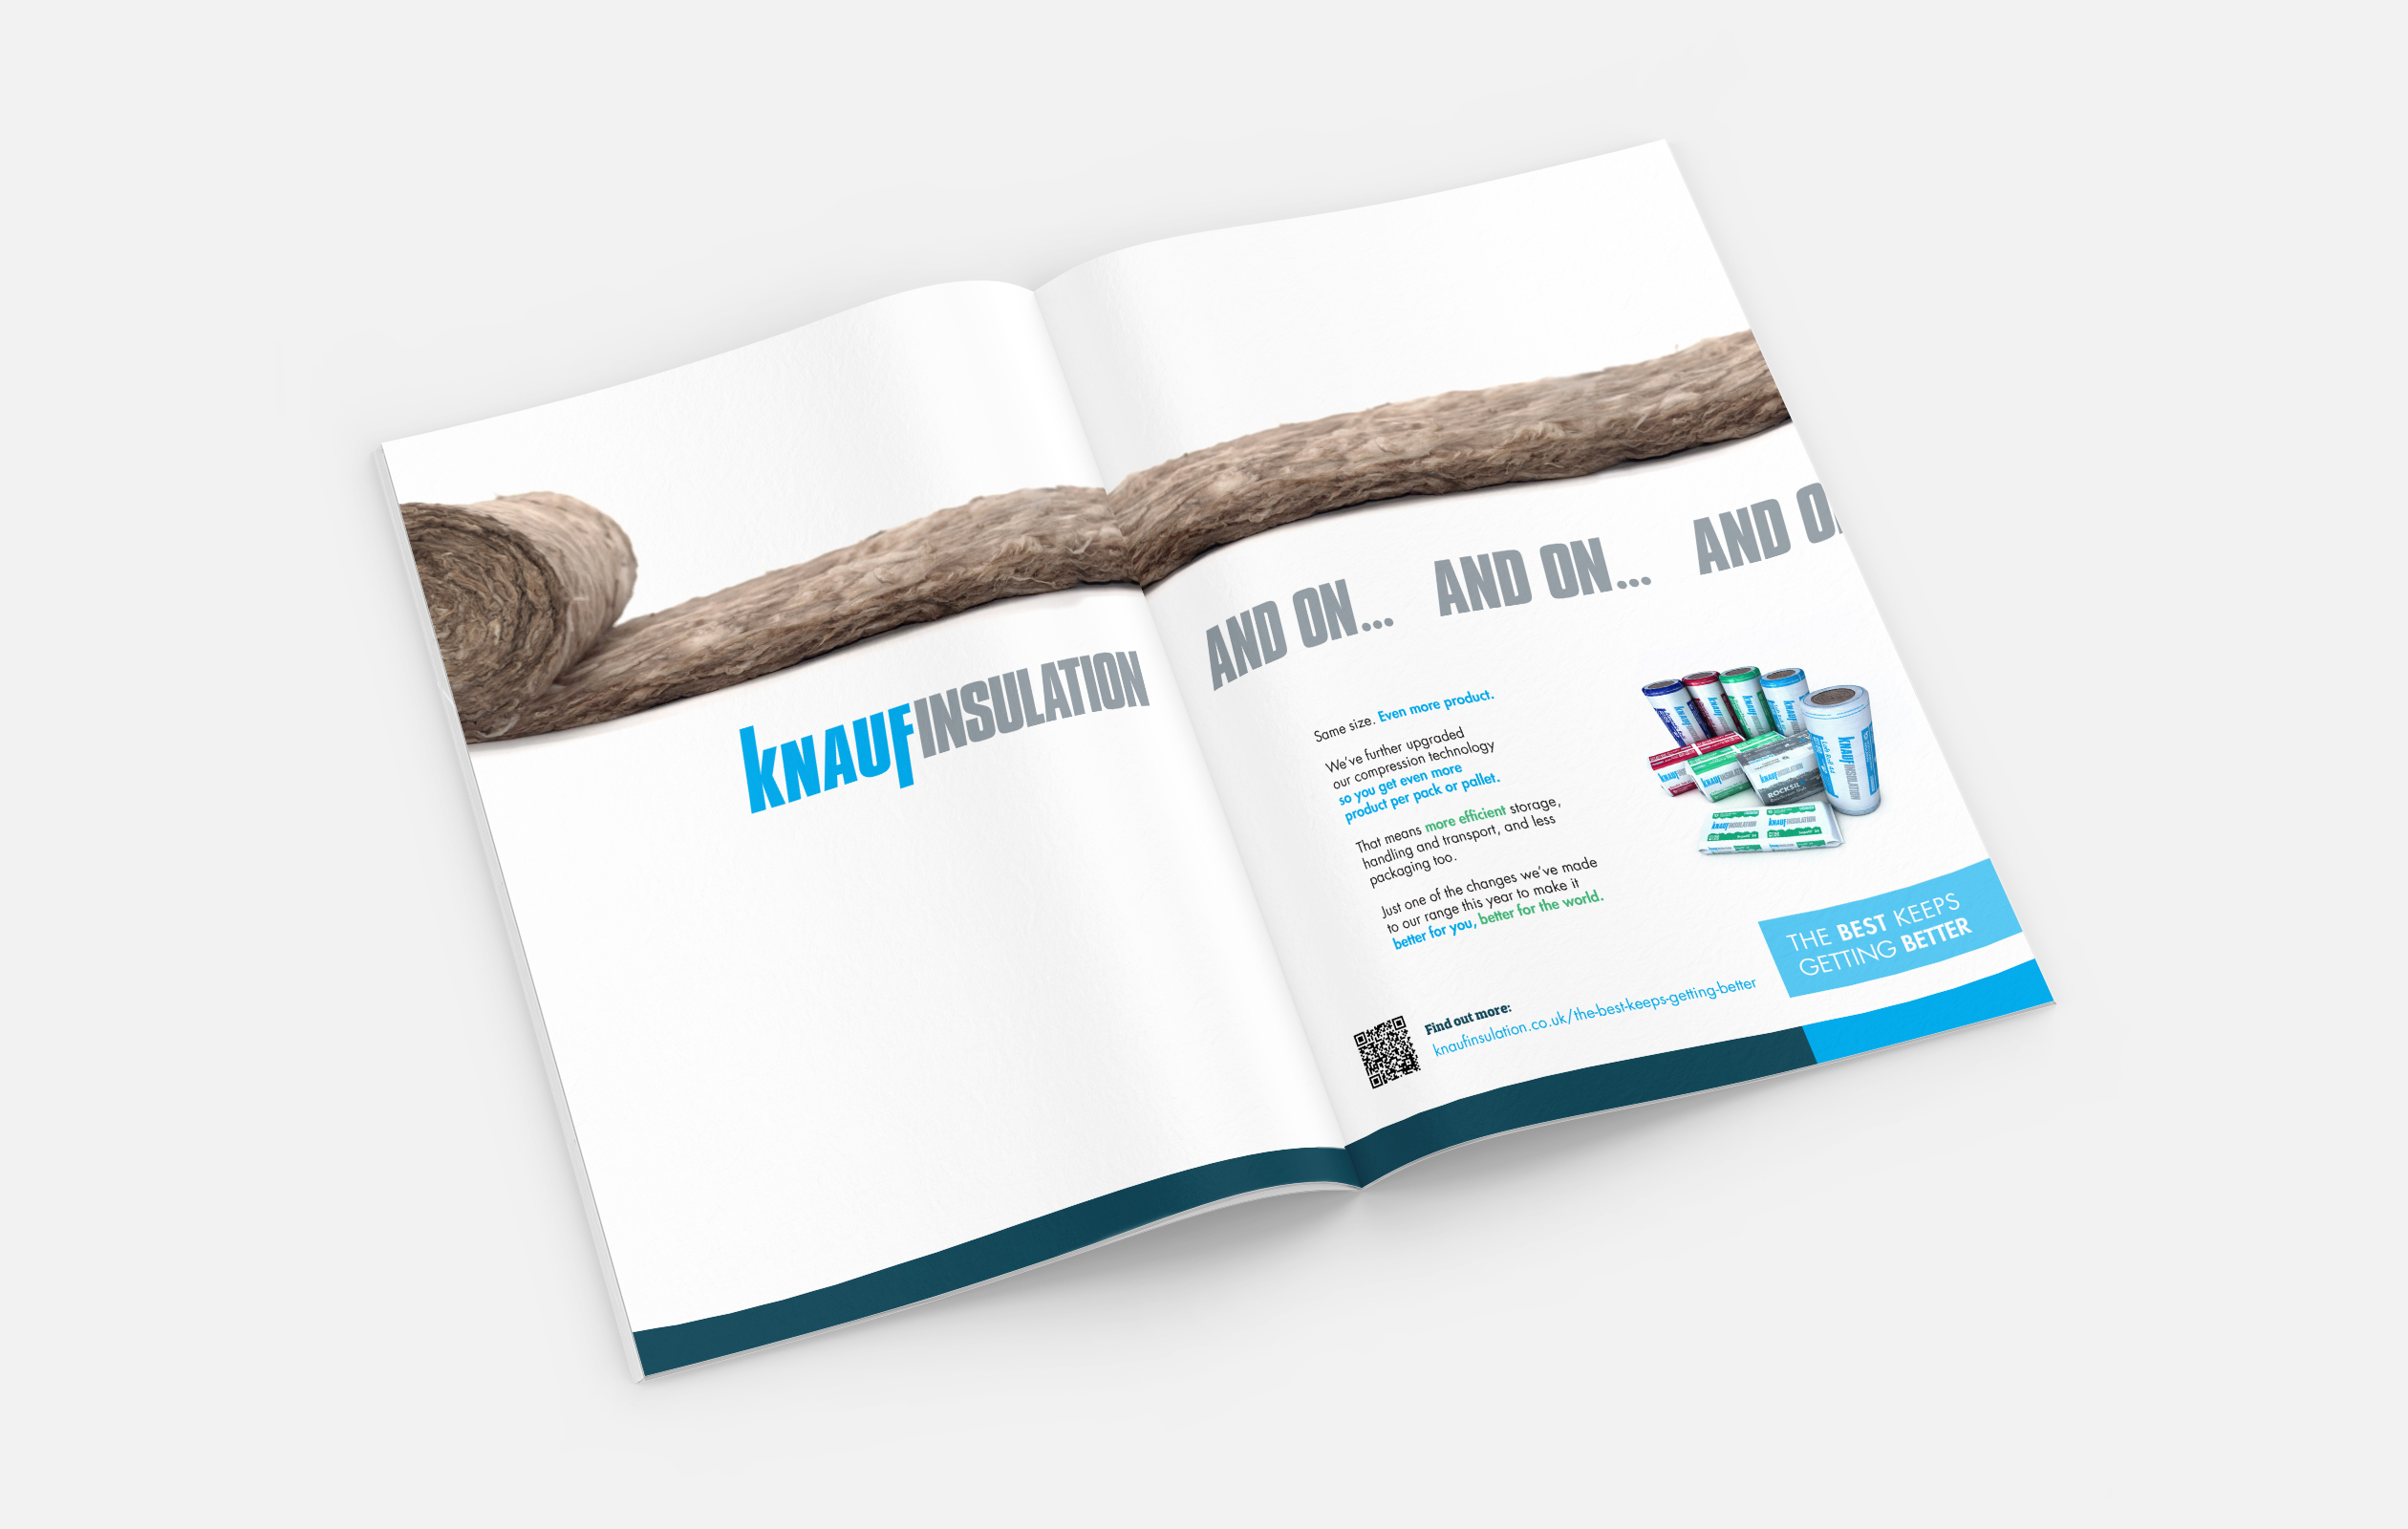 Knauf Insulation and on... magazine advert